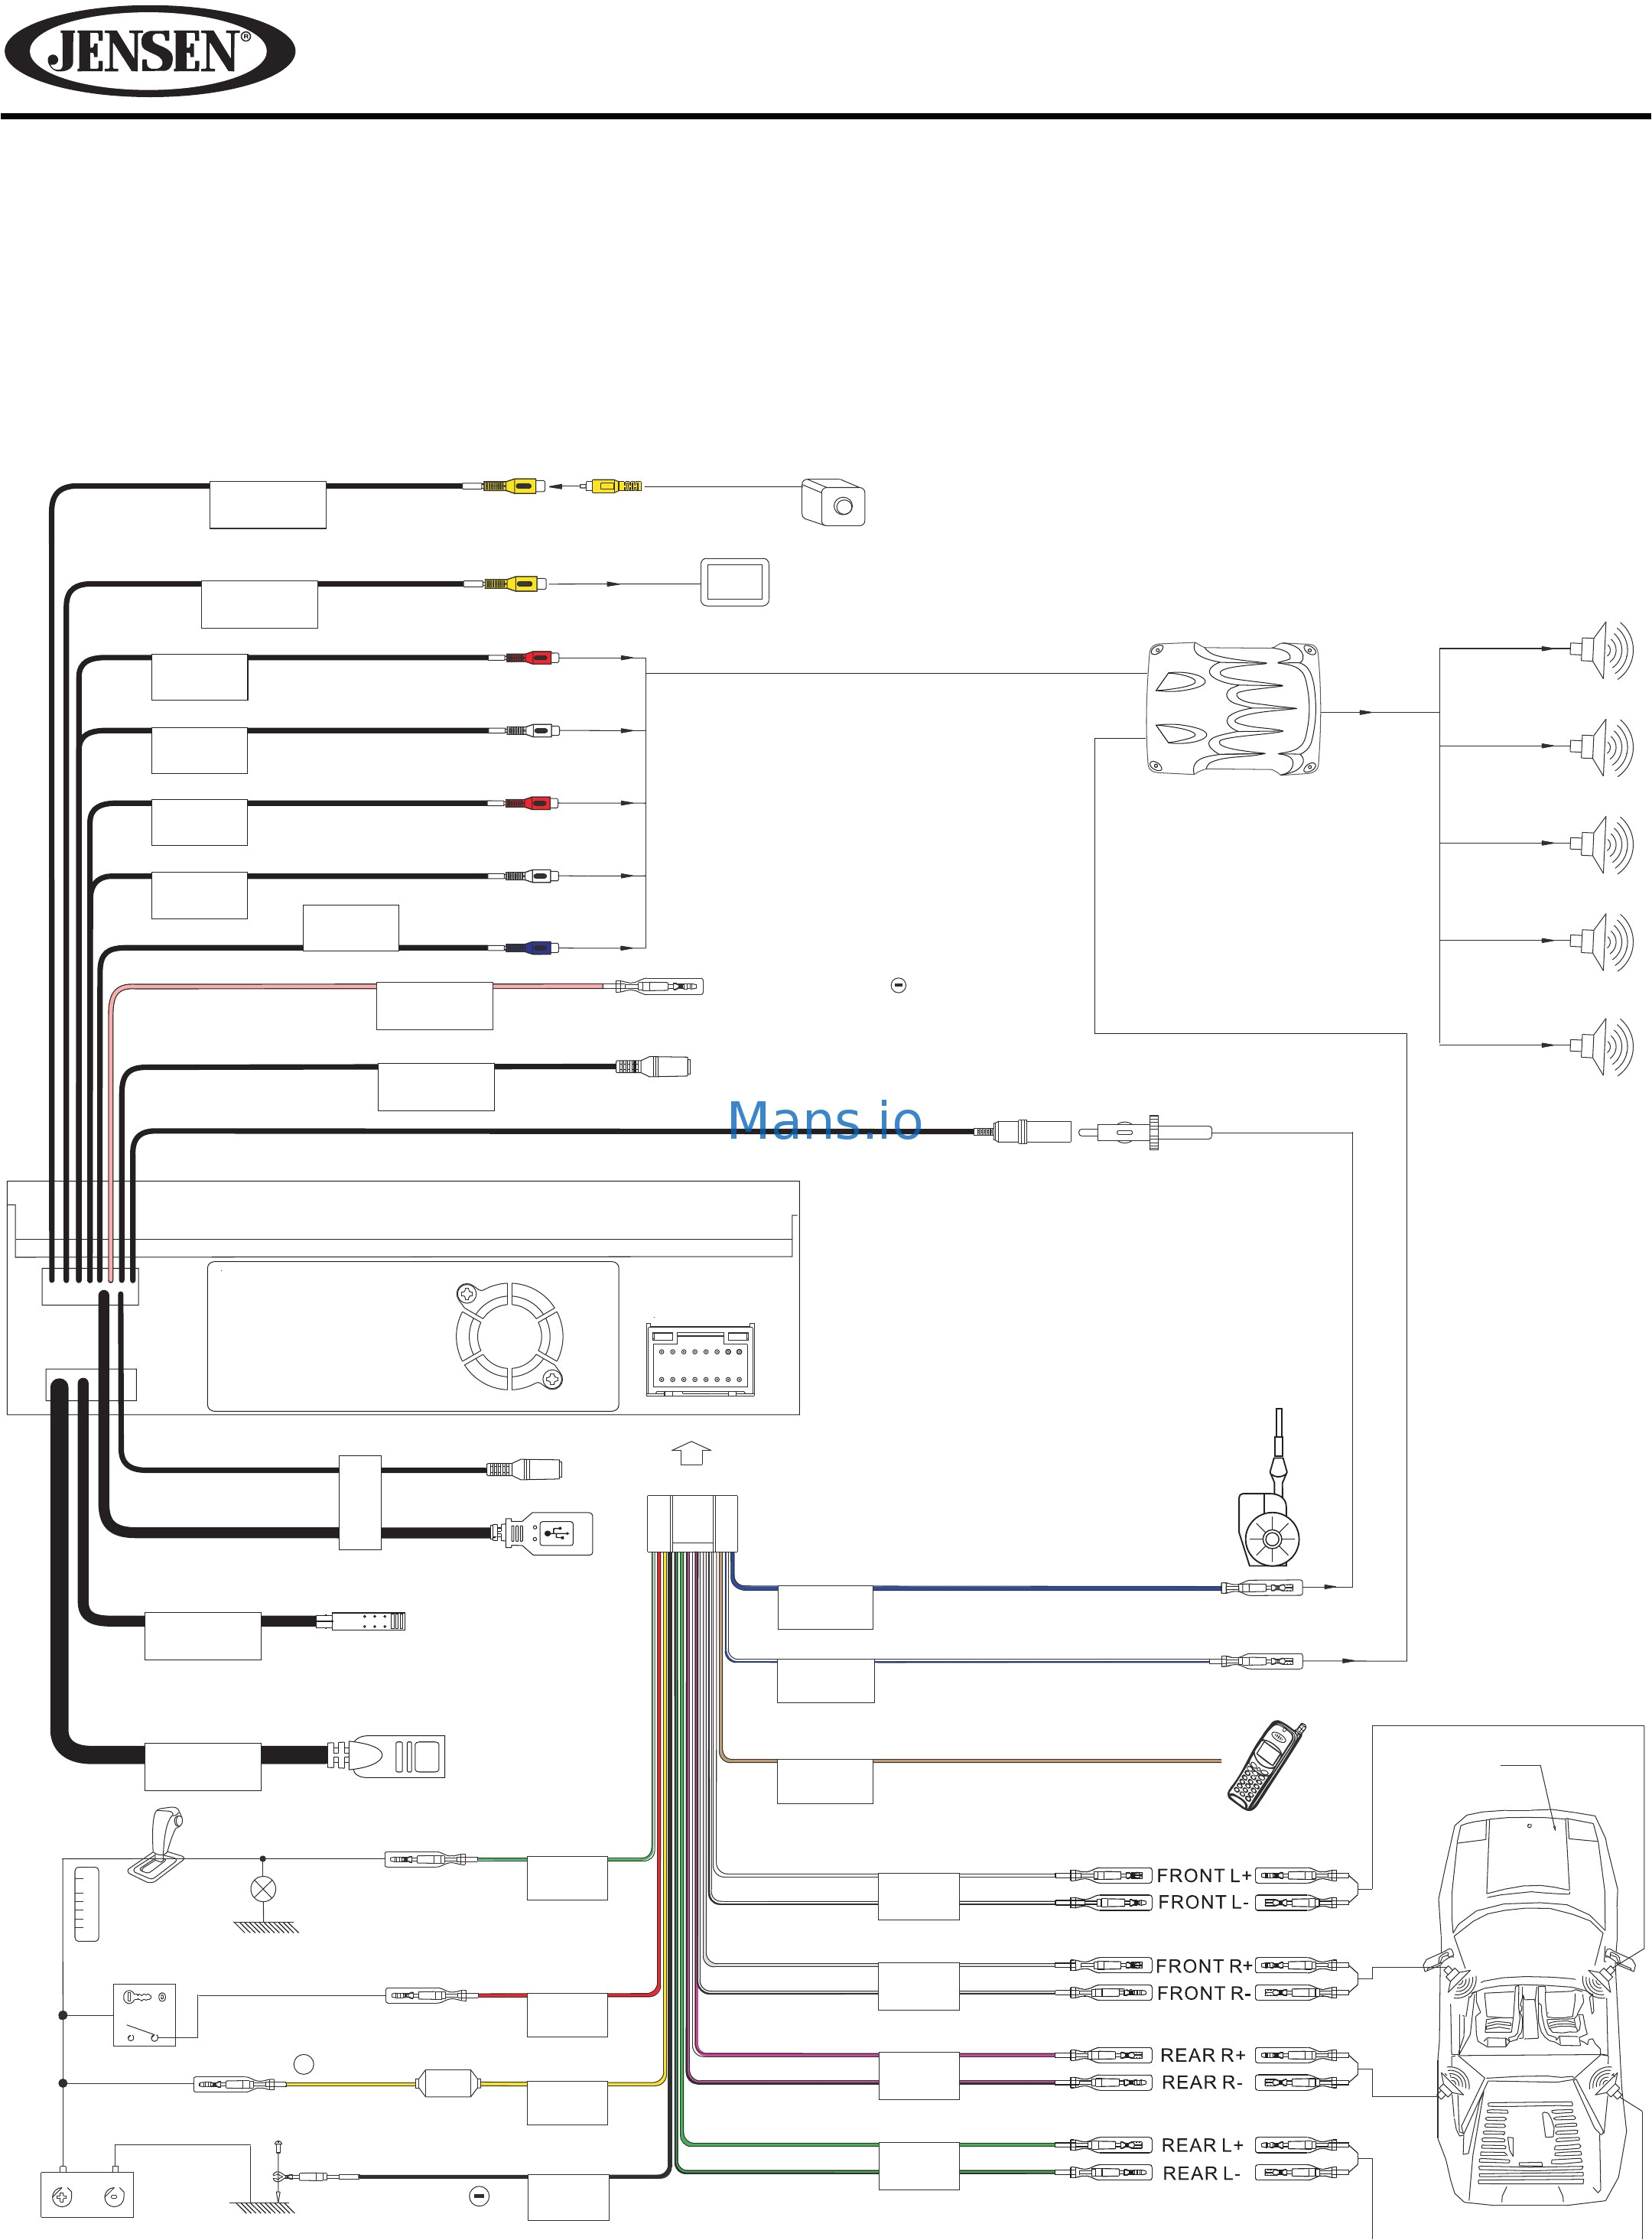 furthermore jensen wiring harness diagram wiring harness wiring jensen jrv212t wiring diagram jensen wiring diagram